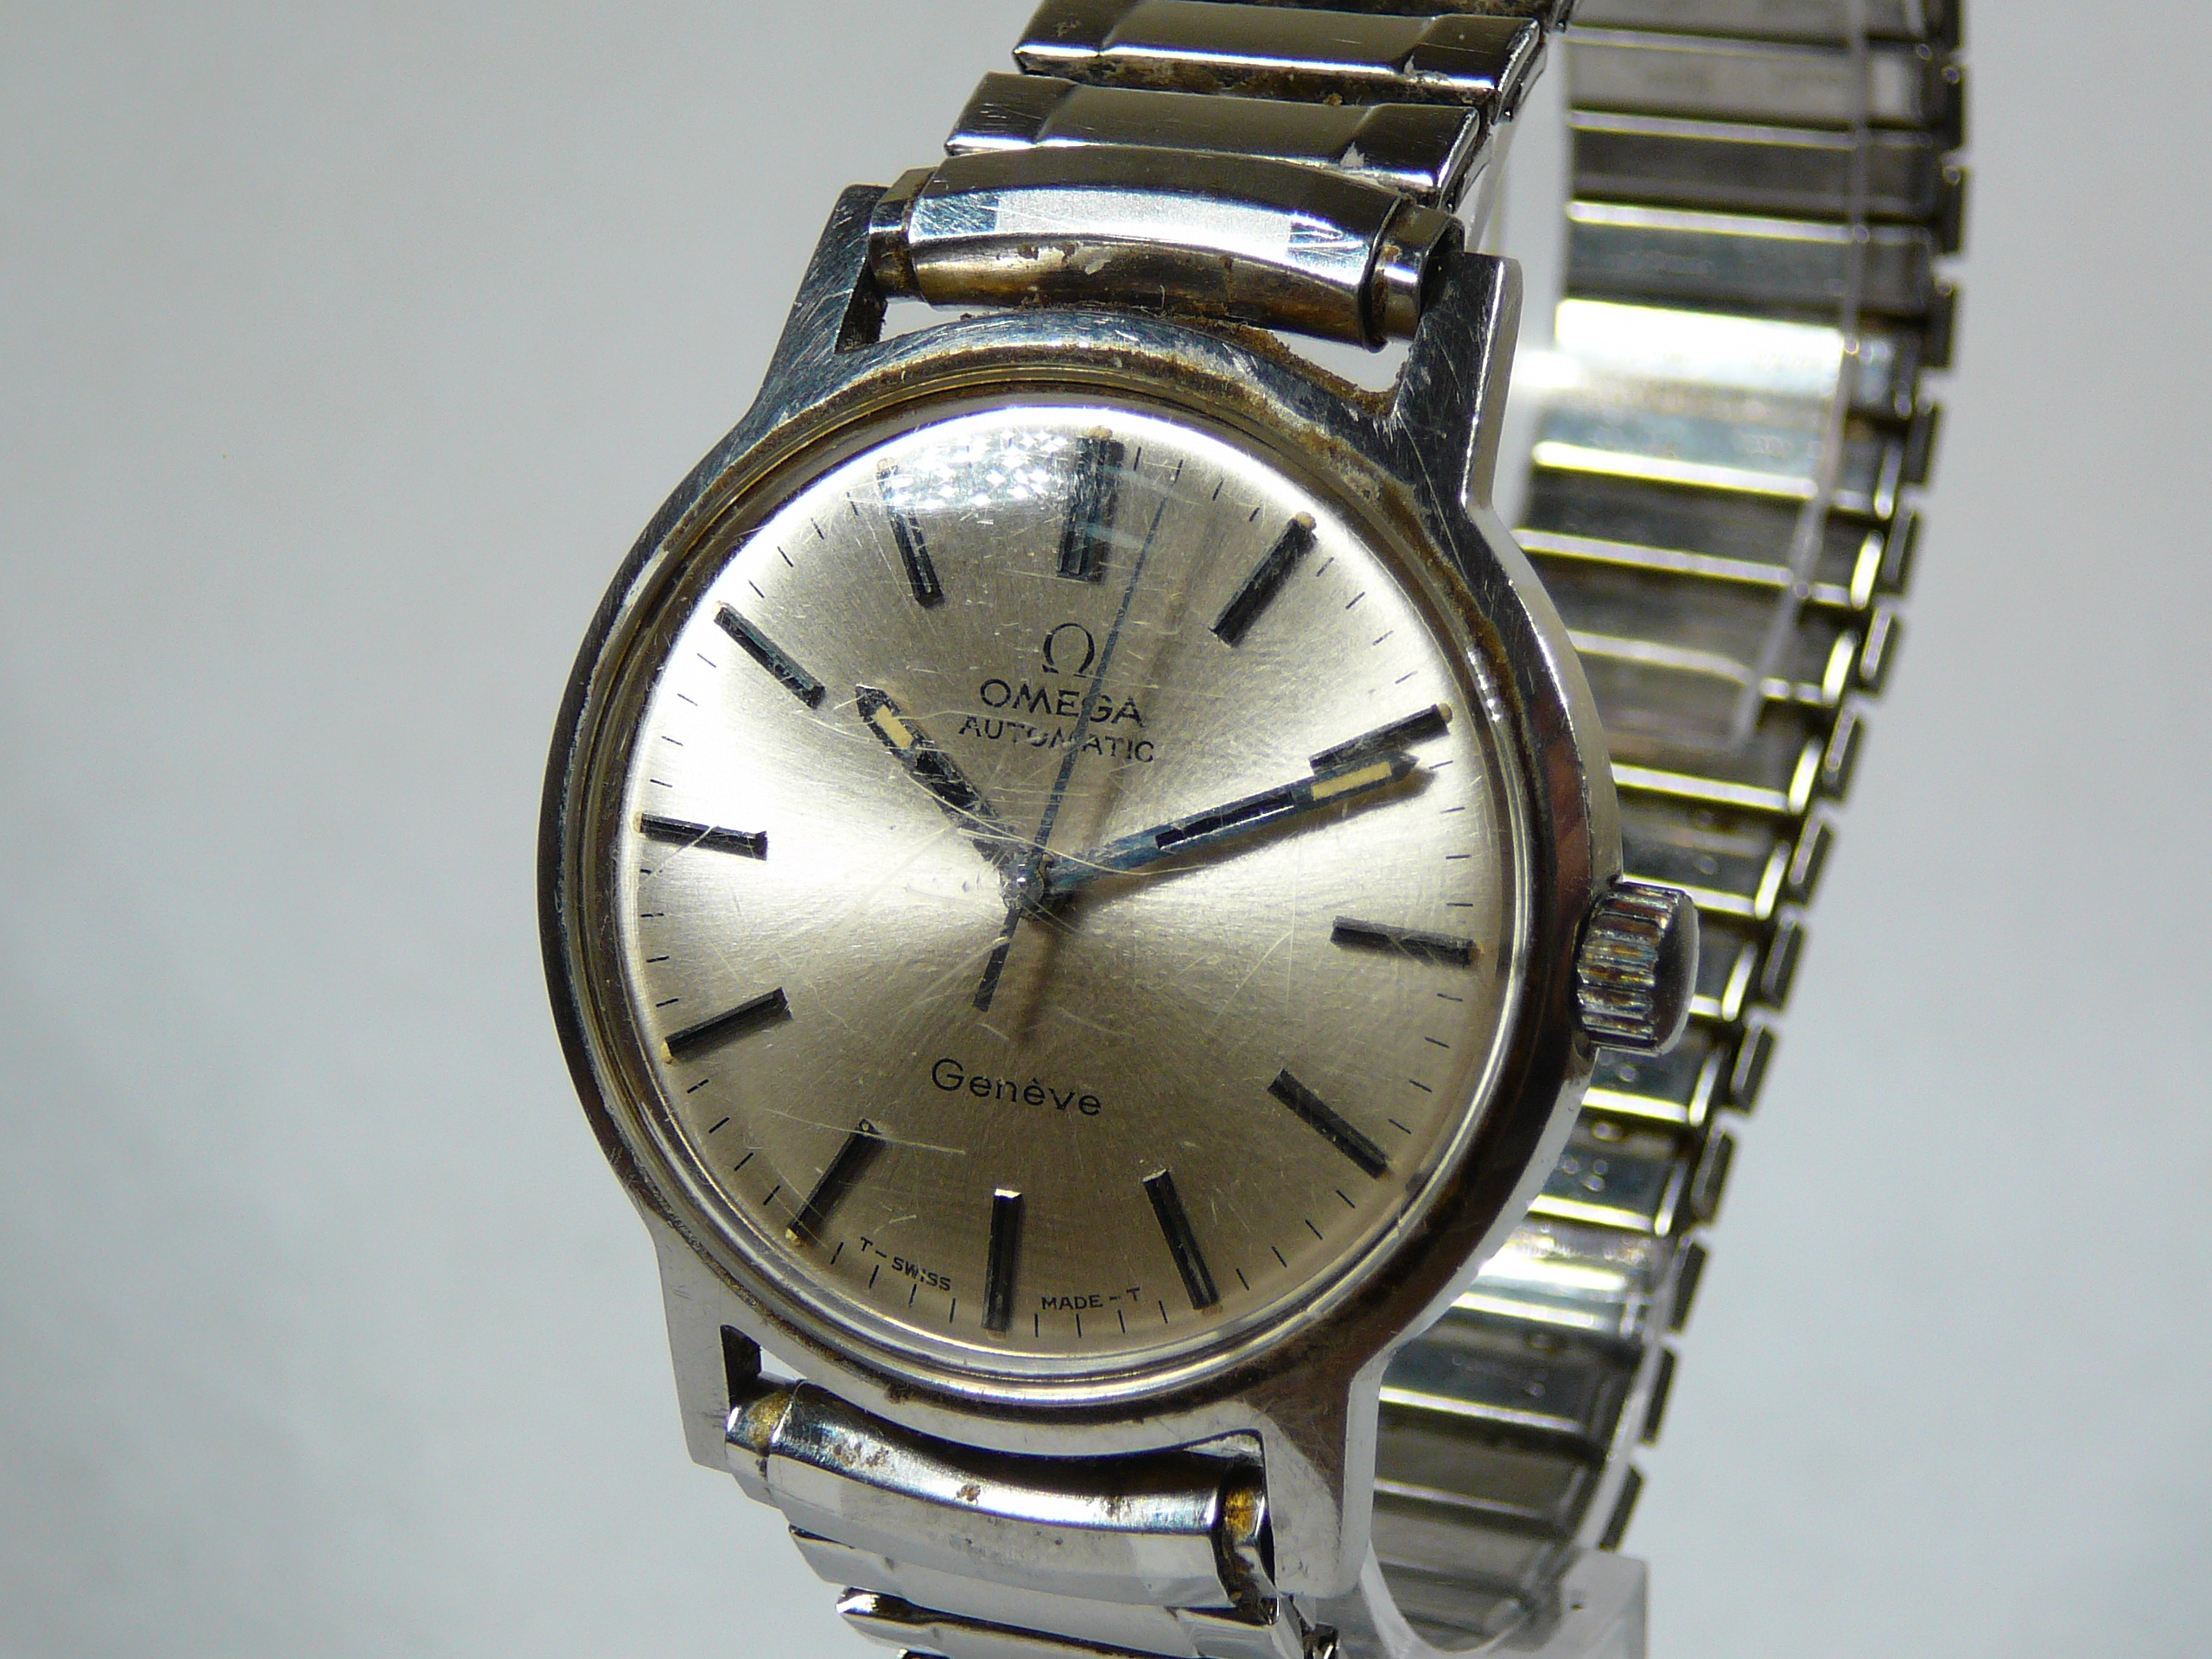 Gents Vintage Omega Wrist Watch - Image 2 of 3